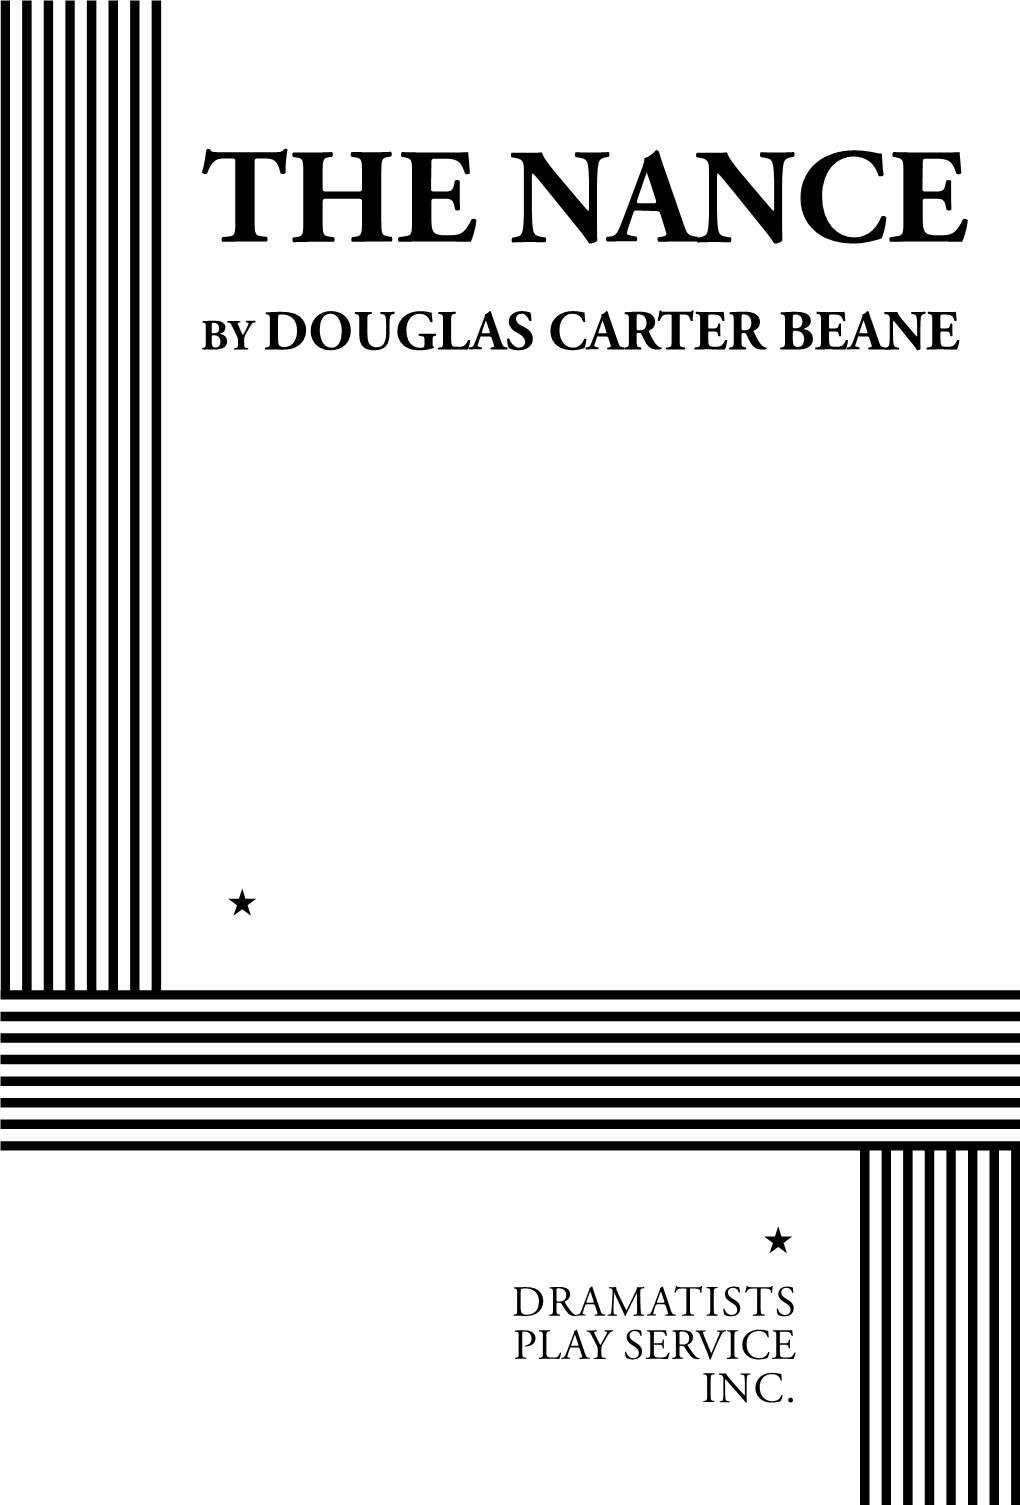 The Nance by Douglas Carter Beane